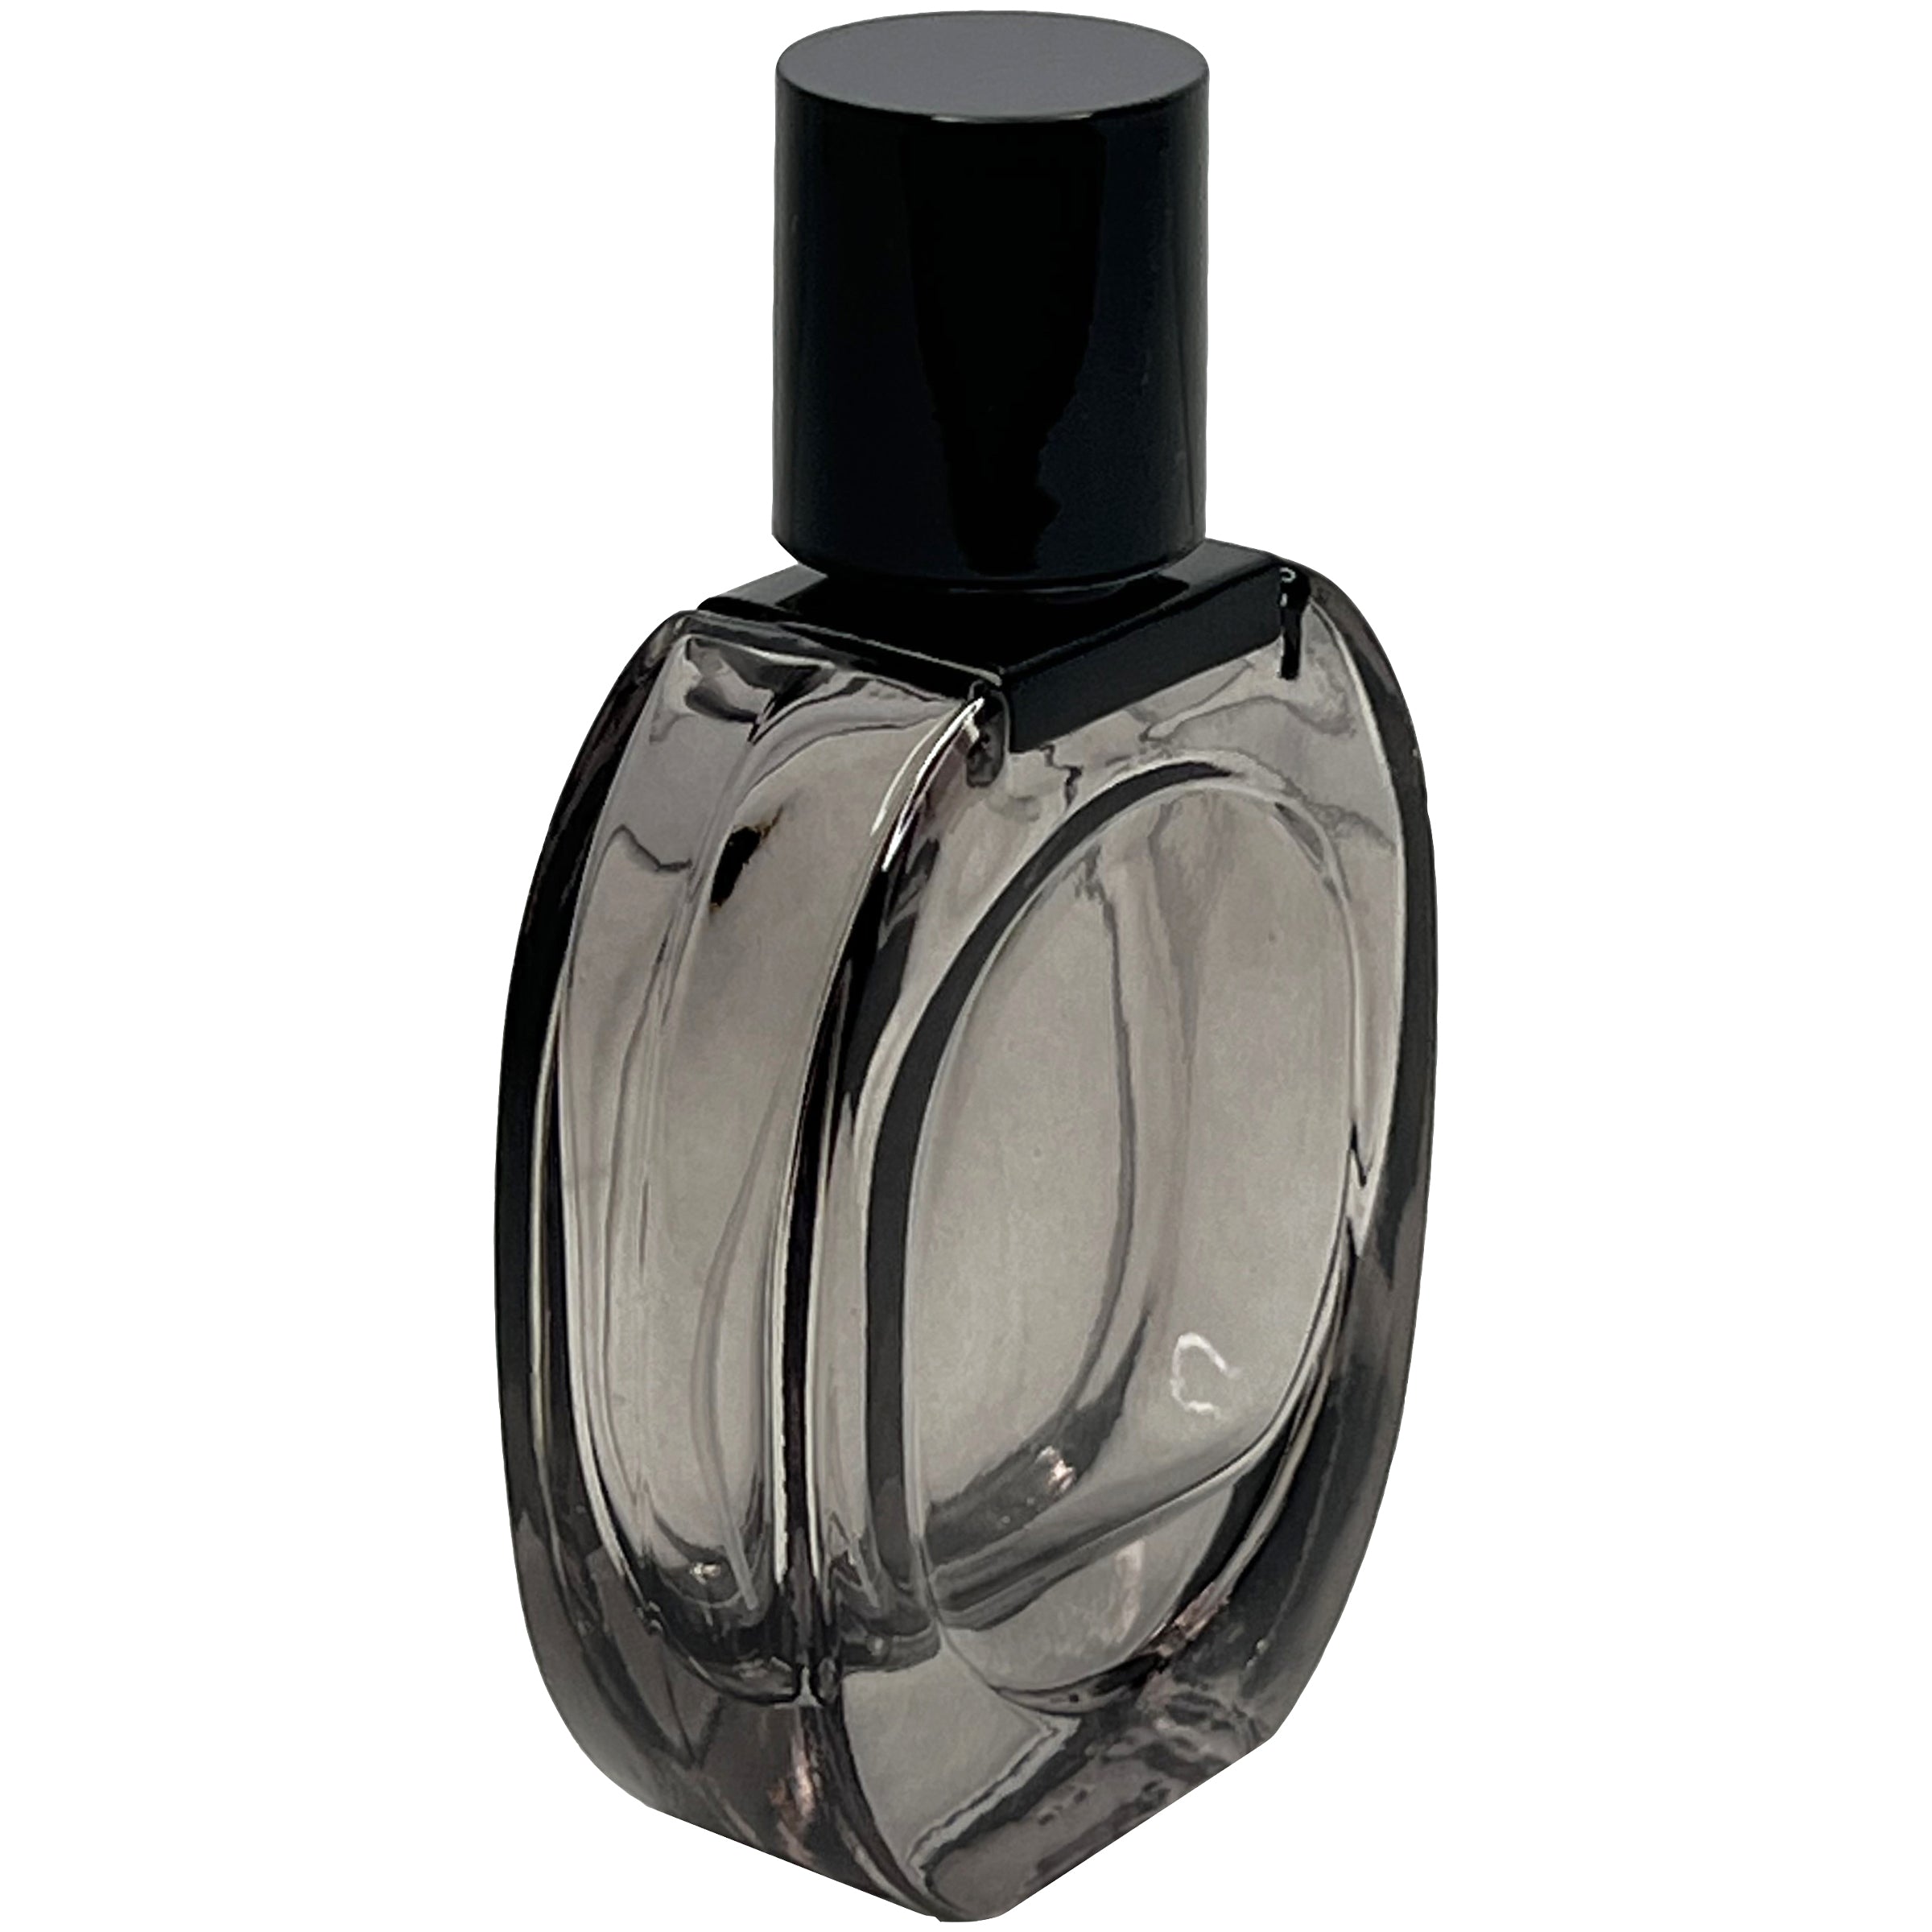 30ml 1oz smoked glass oval perfume spray bottles